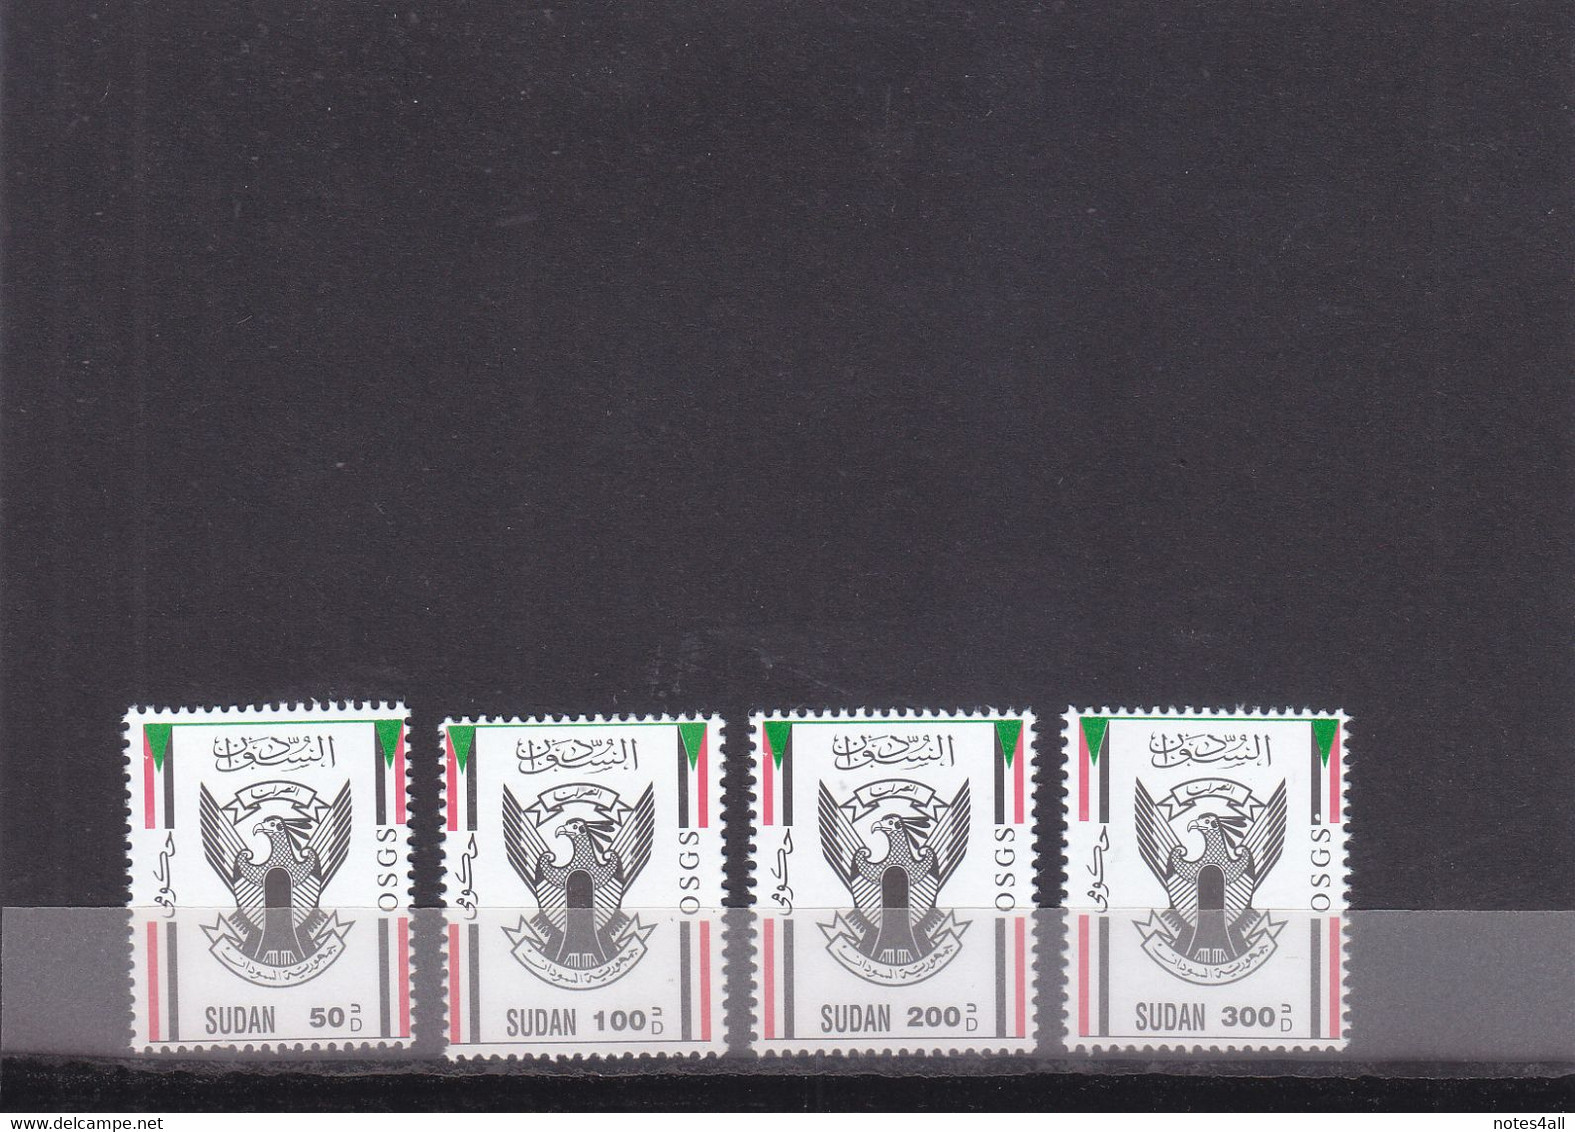 Stamps SUDAN 2003 SC O113 O116 OFFICIAL LOT X10 MNH SETS # 54 - Soudan (1954-...)